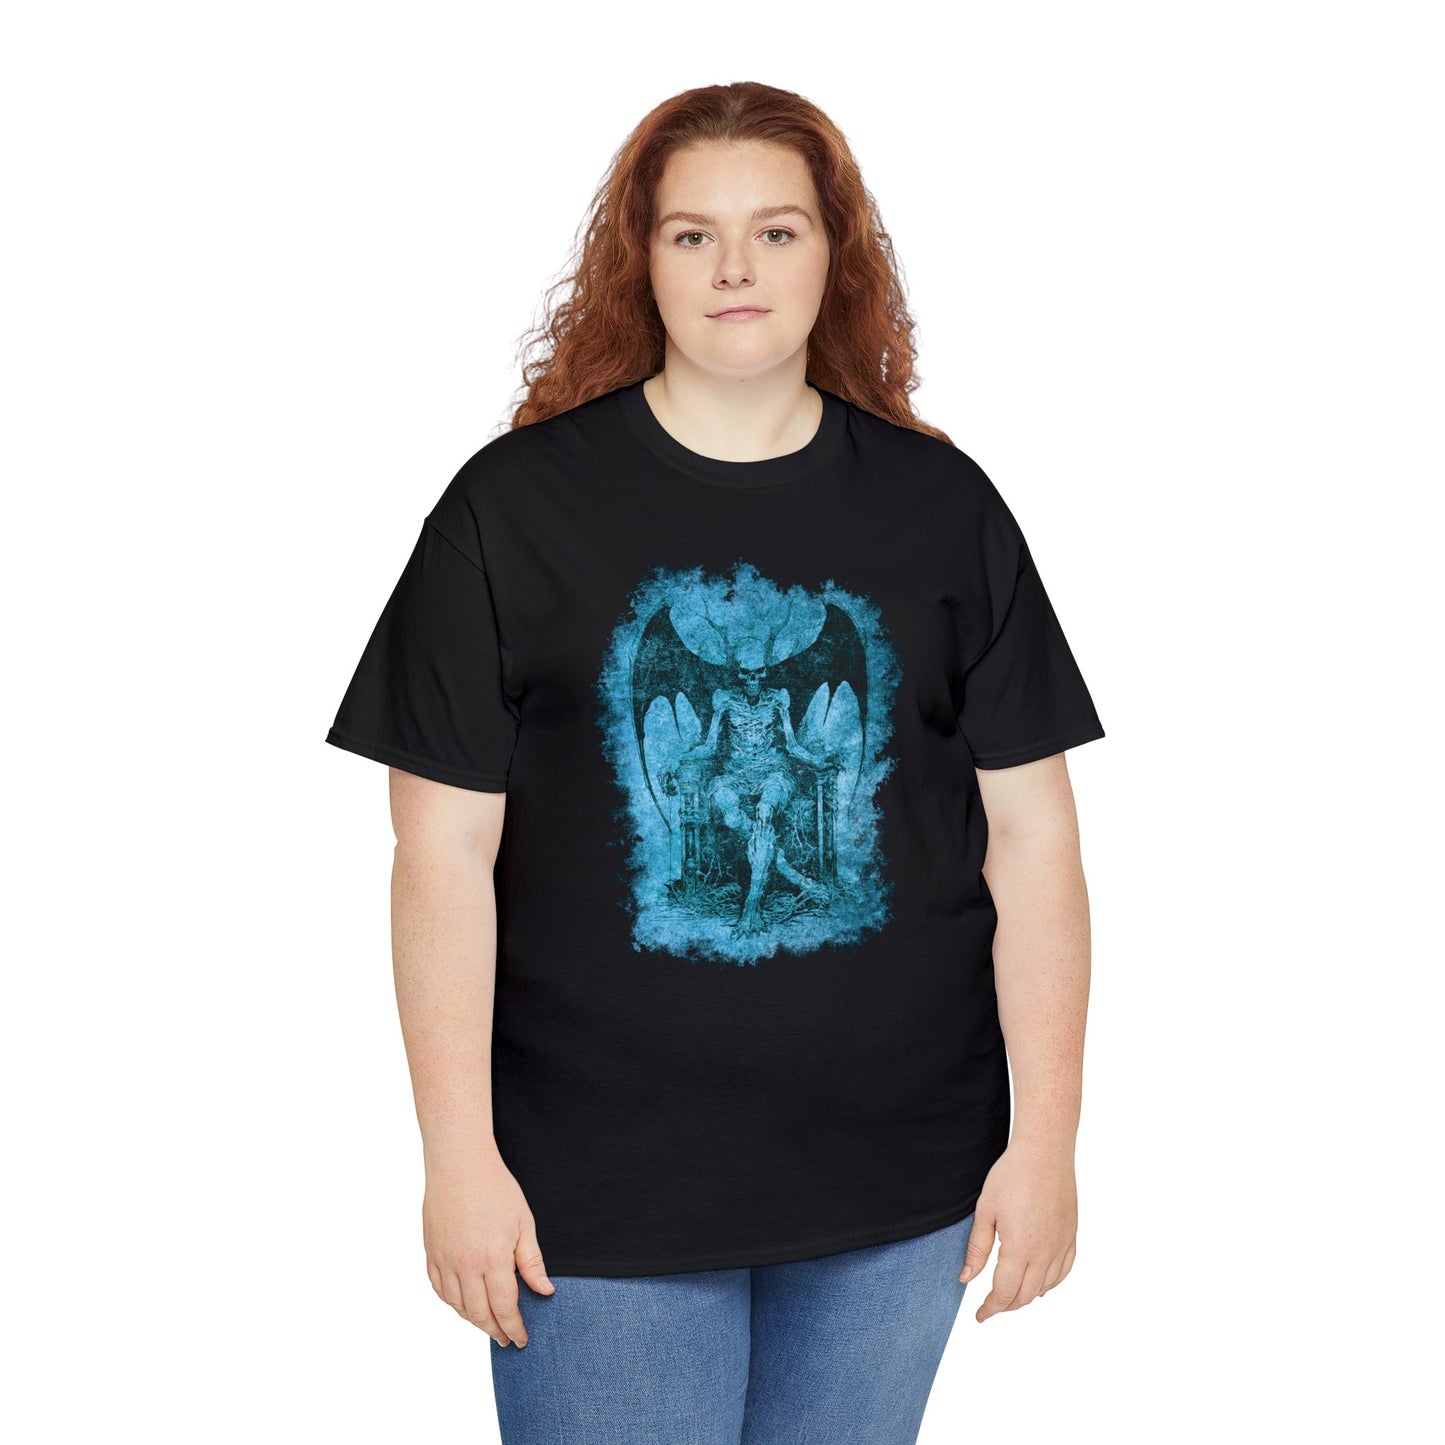 Unisex T-shirt Devil on his Throne in Blue - Frogos Design